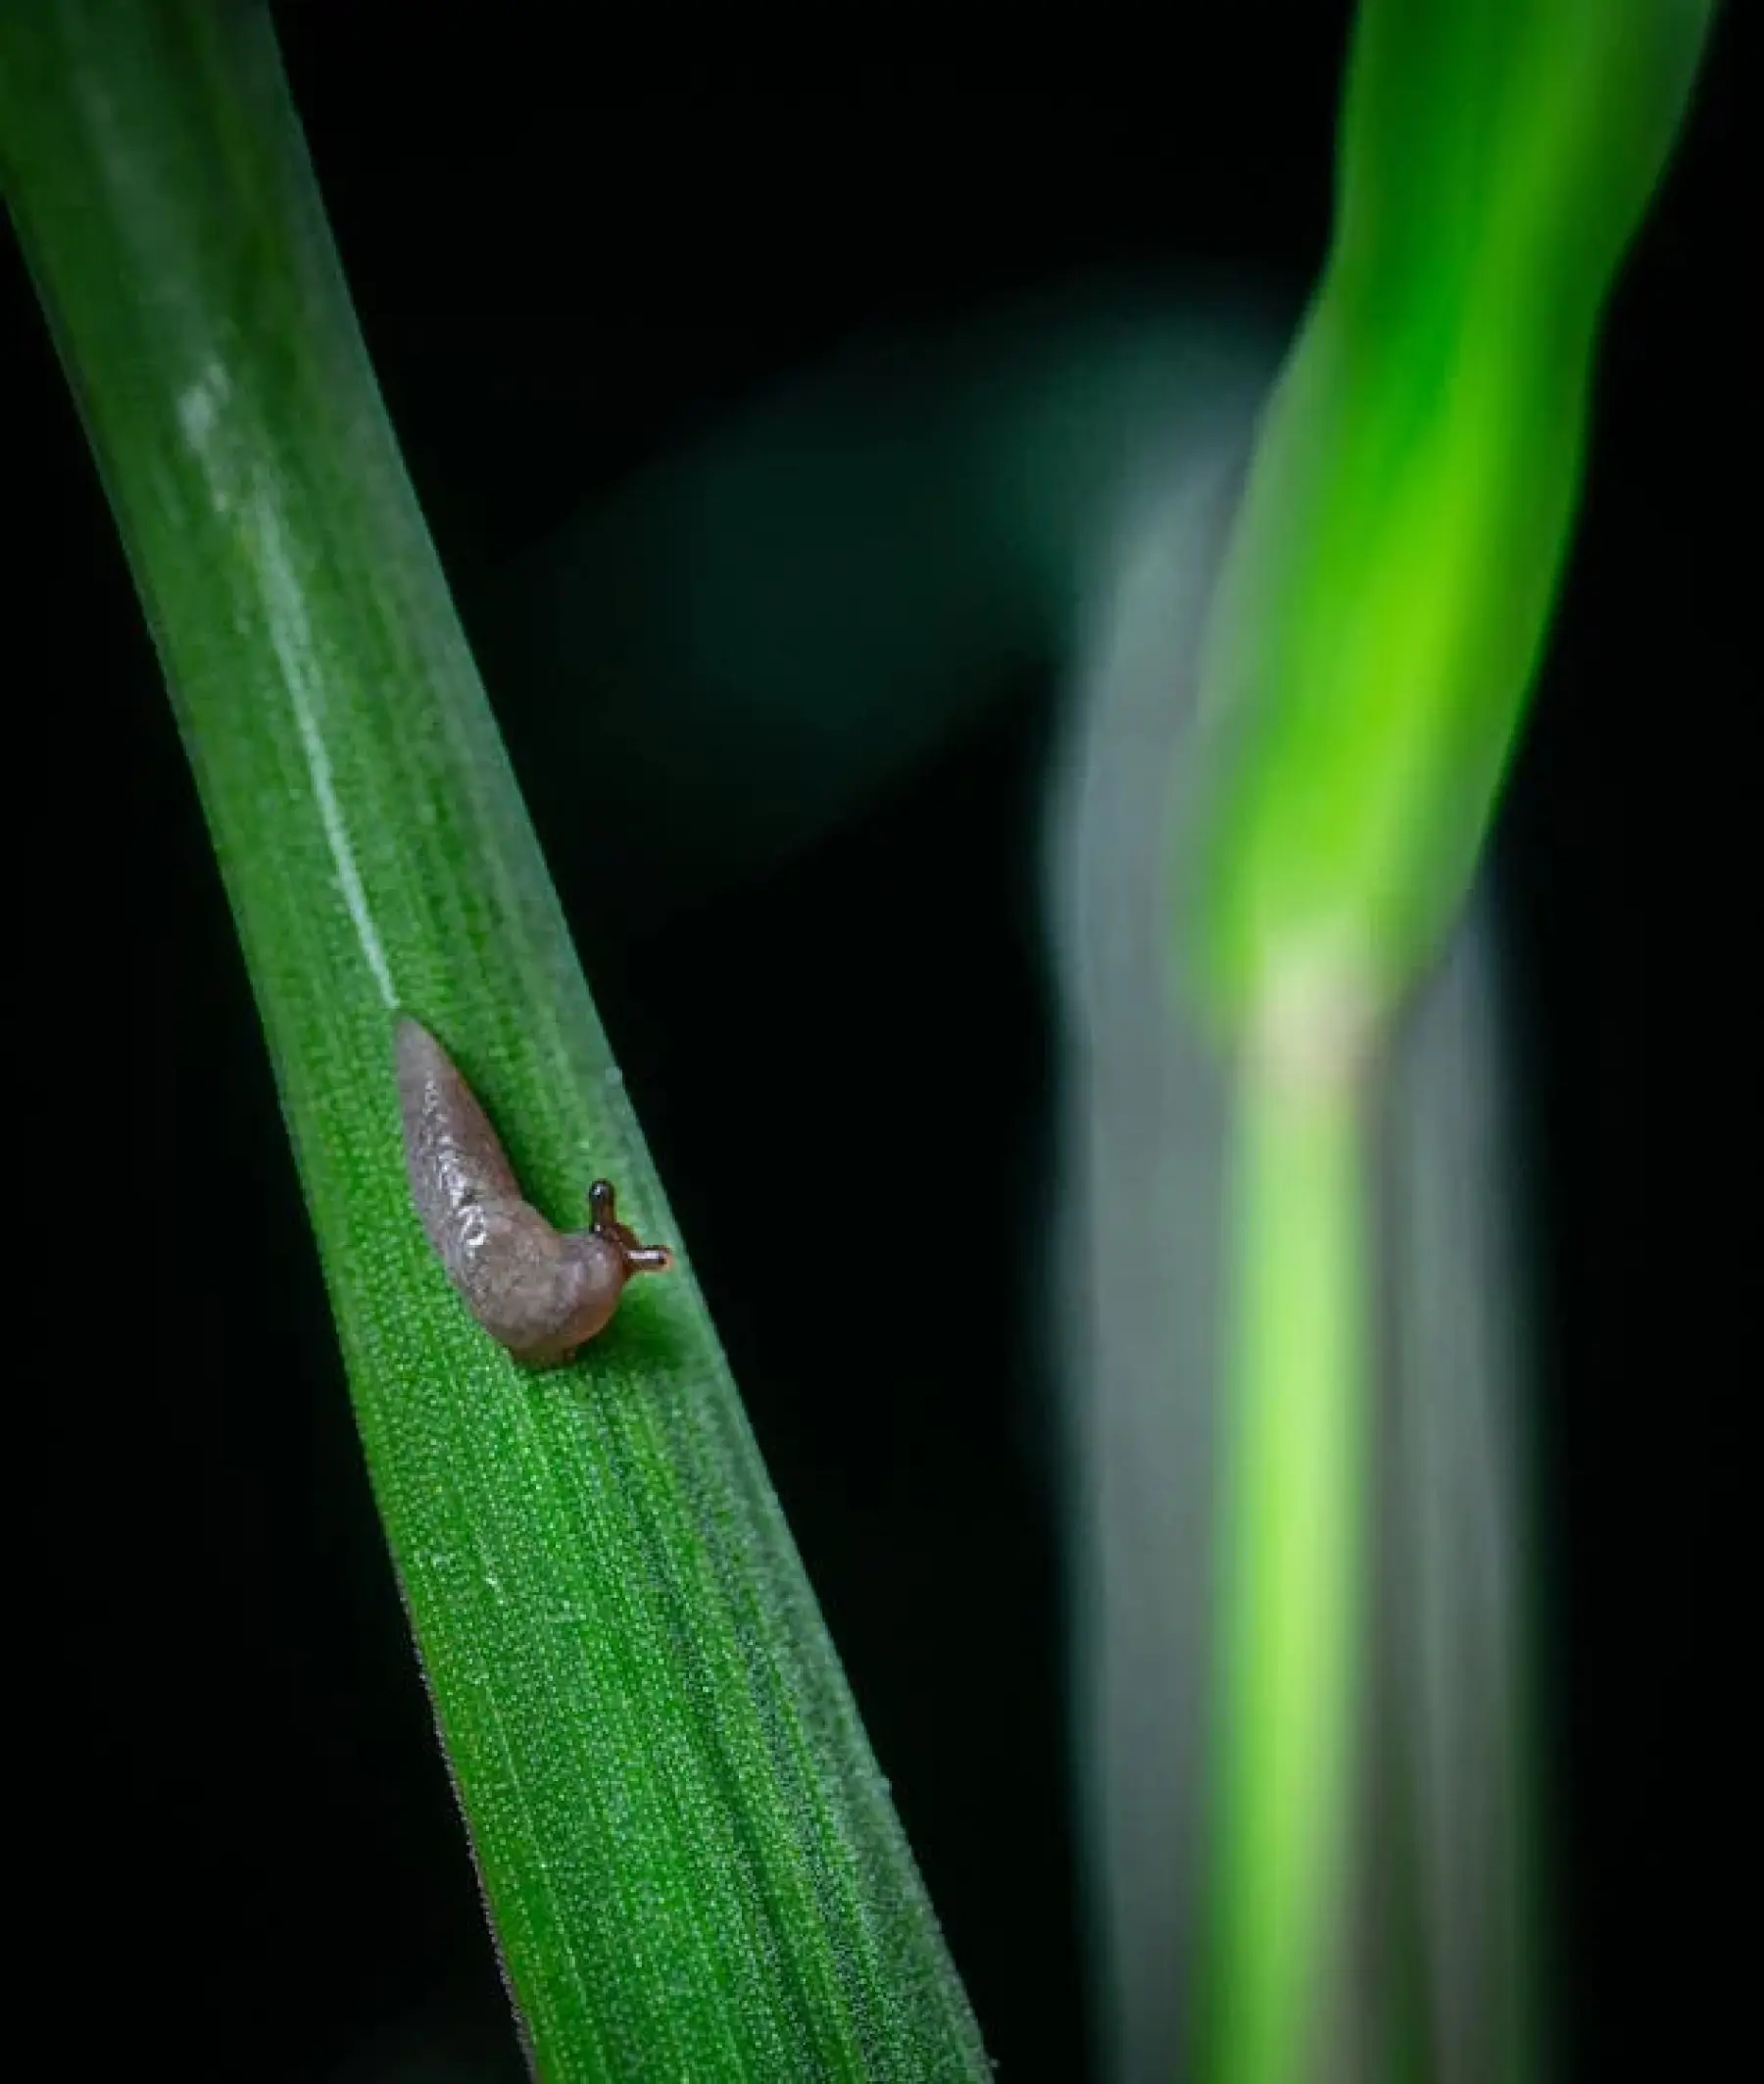 Grey field slug - foe!  Causes devastating damage to crops worldwide.